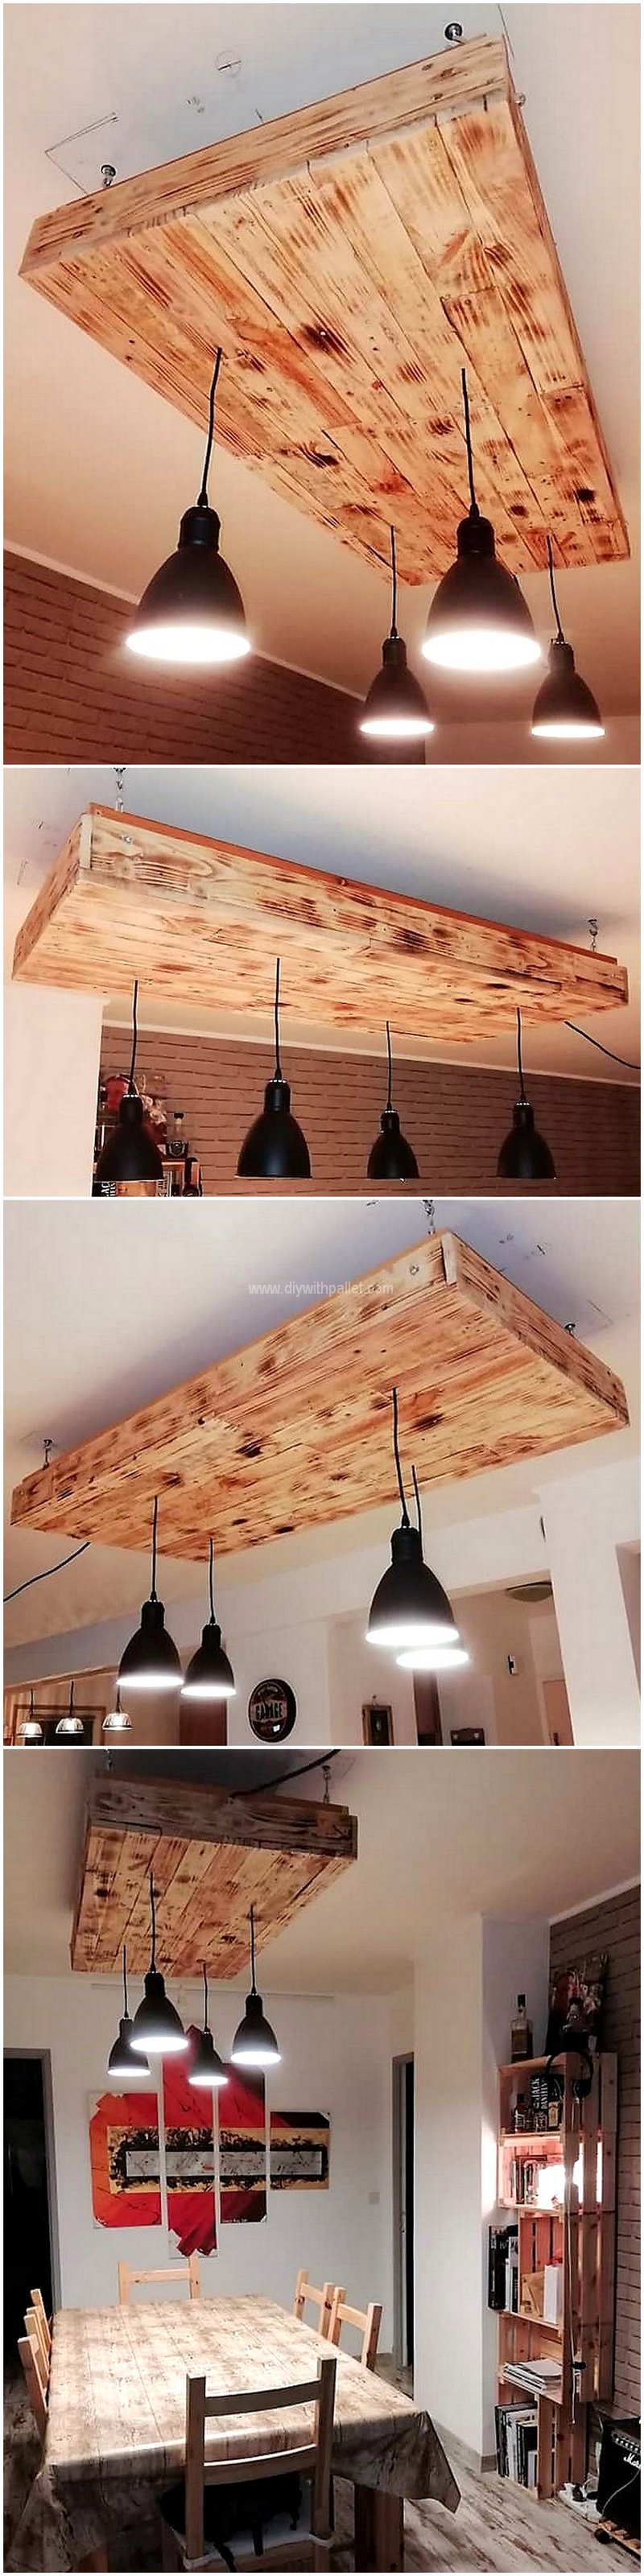 pallets wooden roof lighting art